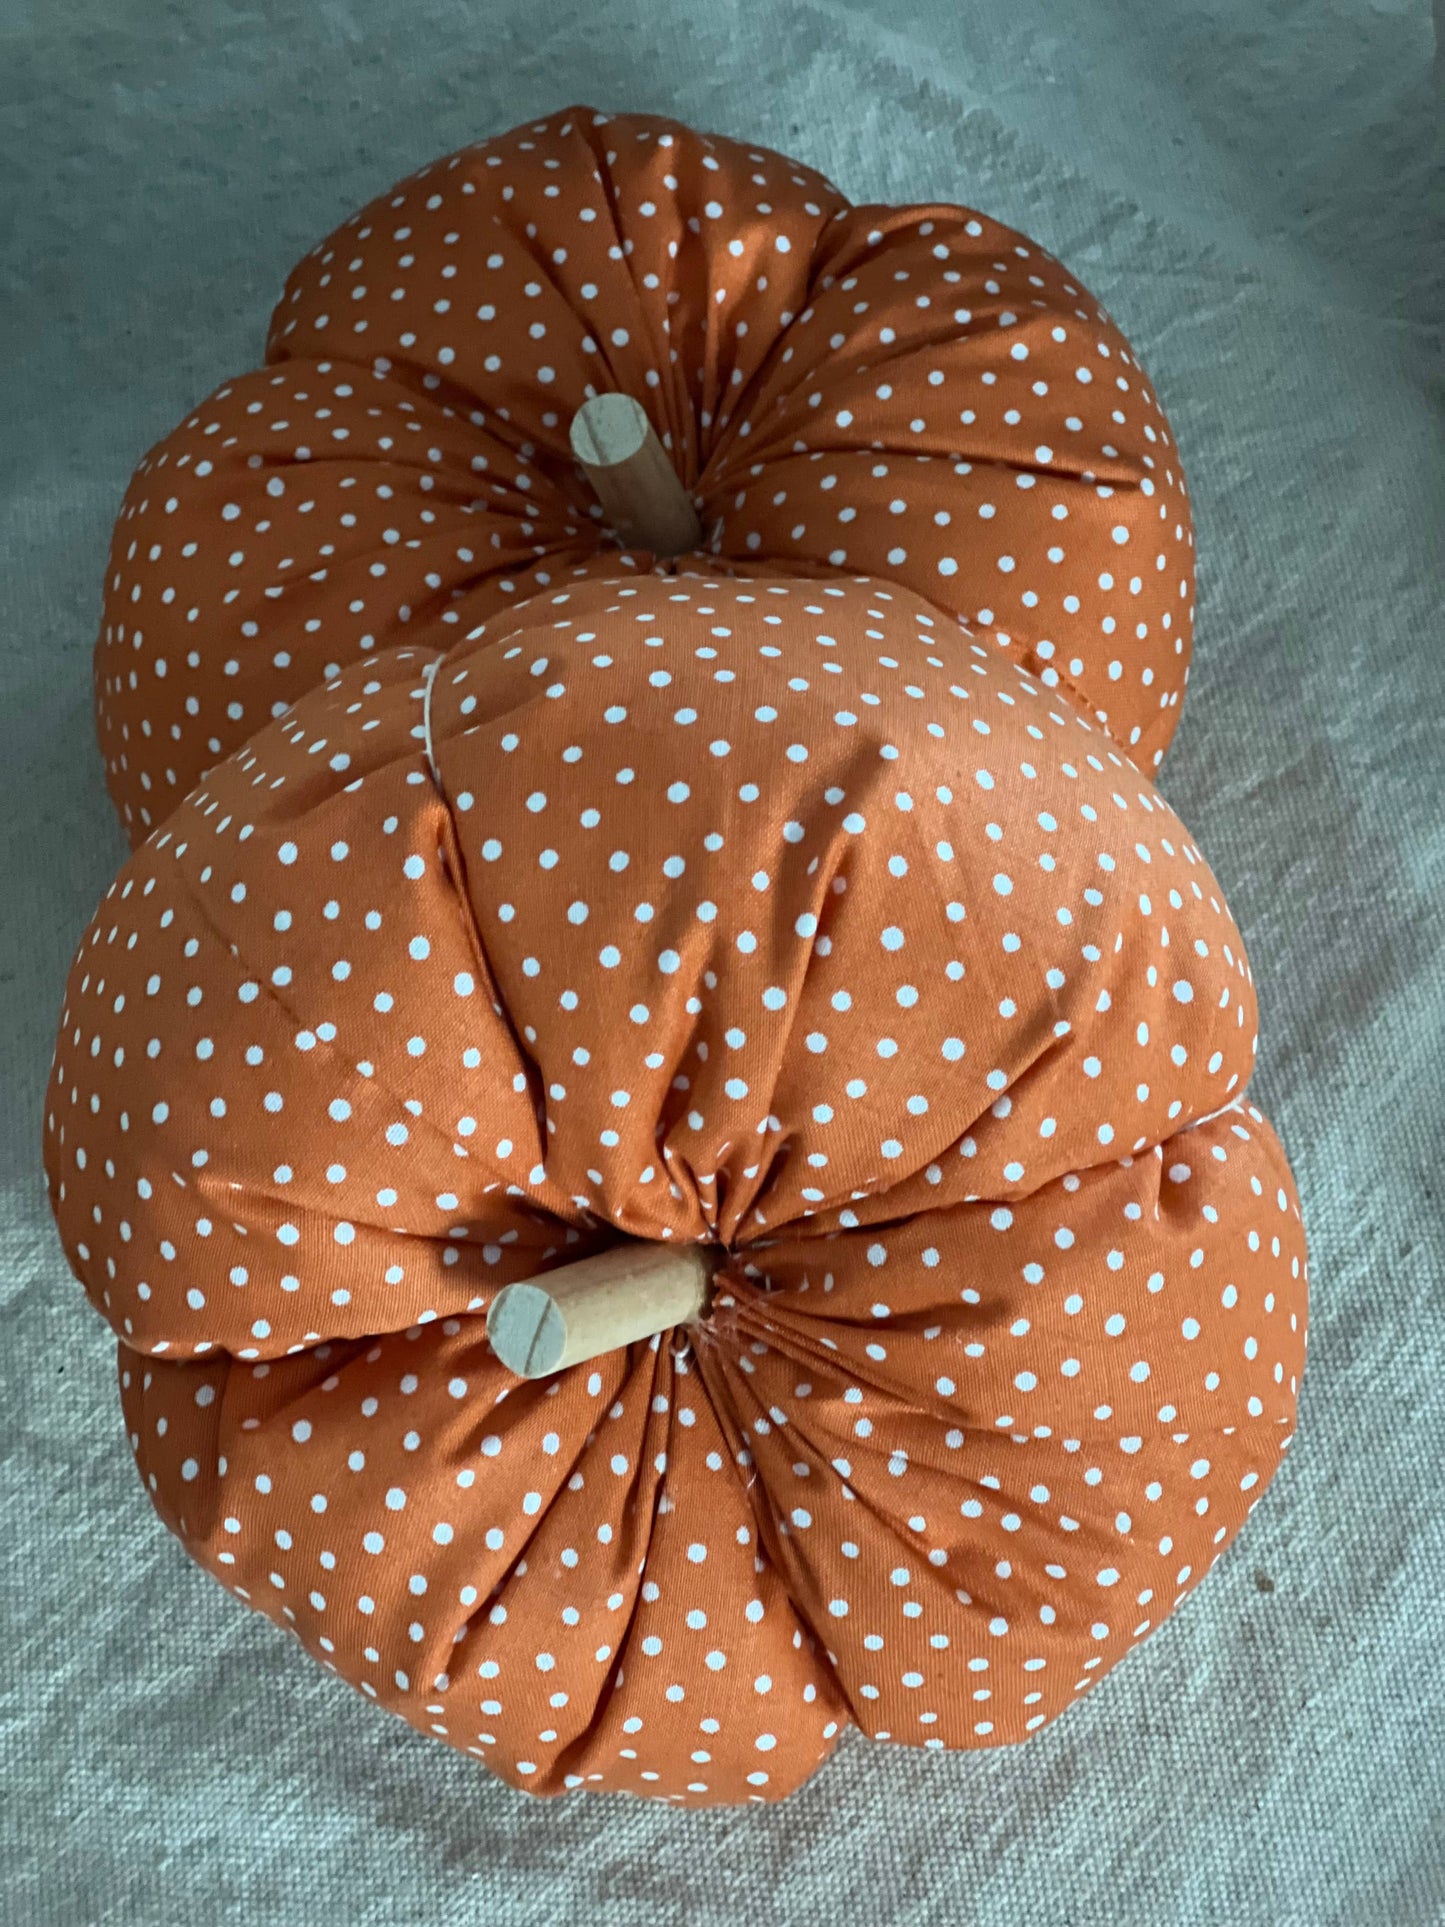 Burnt Orange Polkadot Fabric Pumpkin 8"